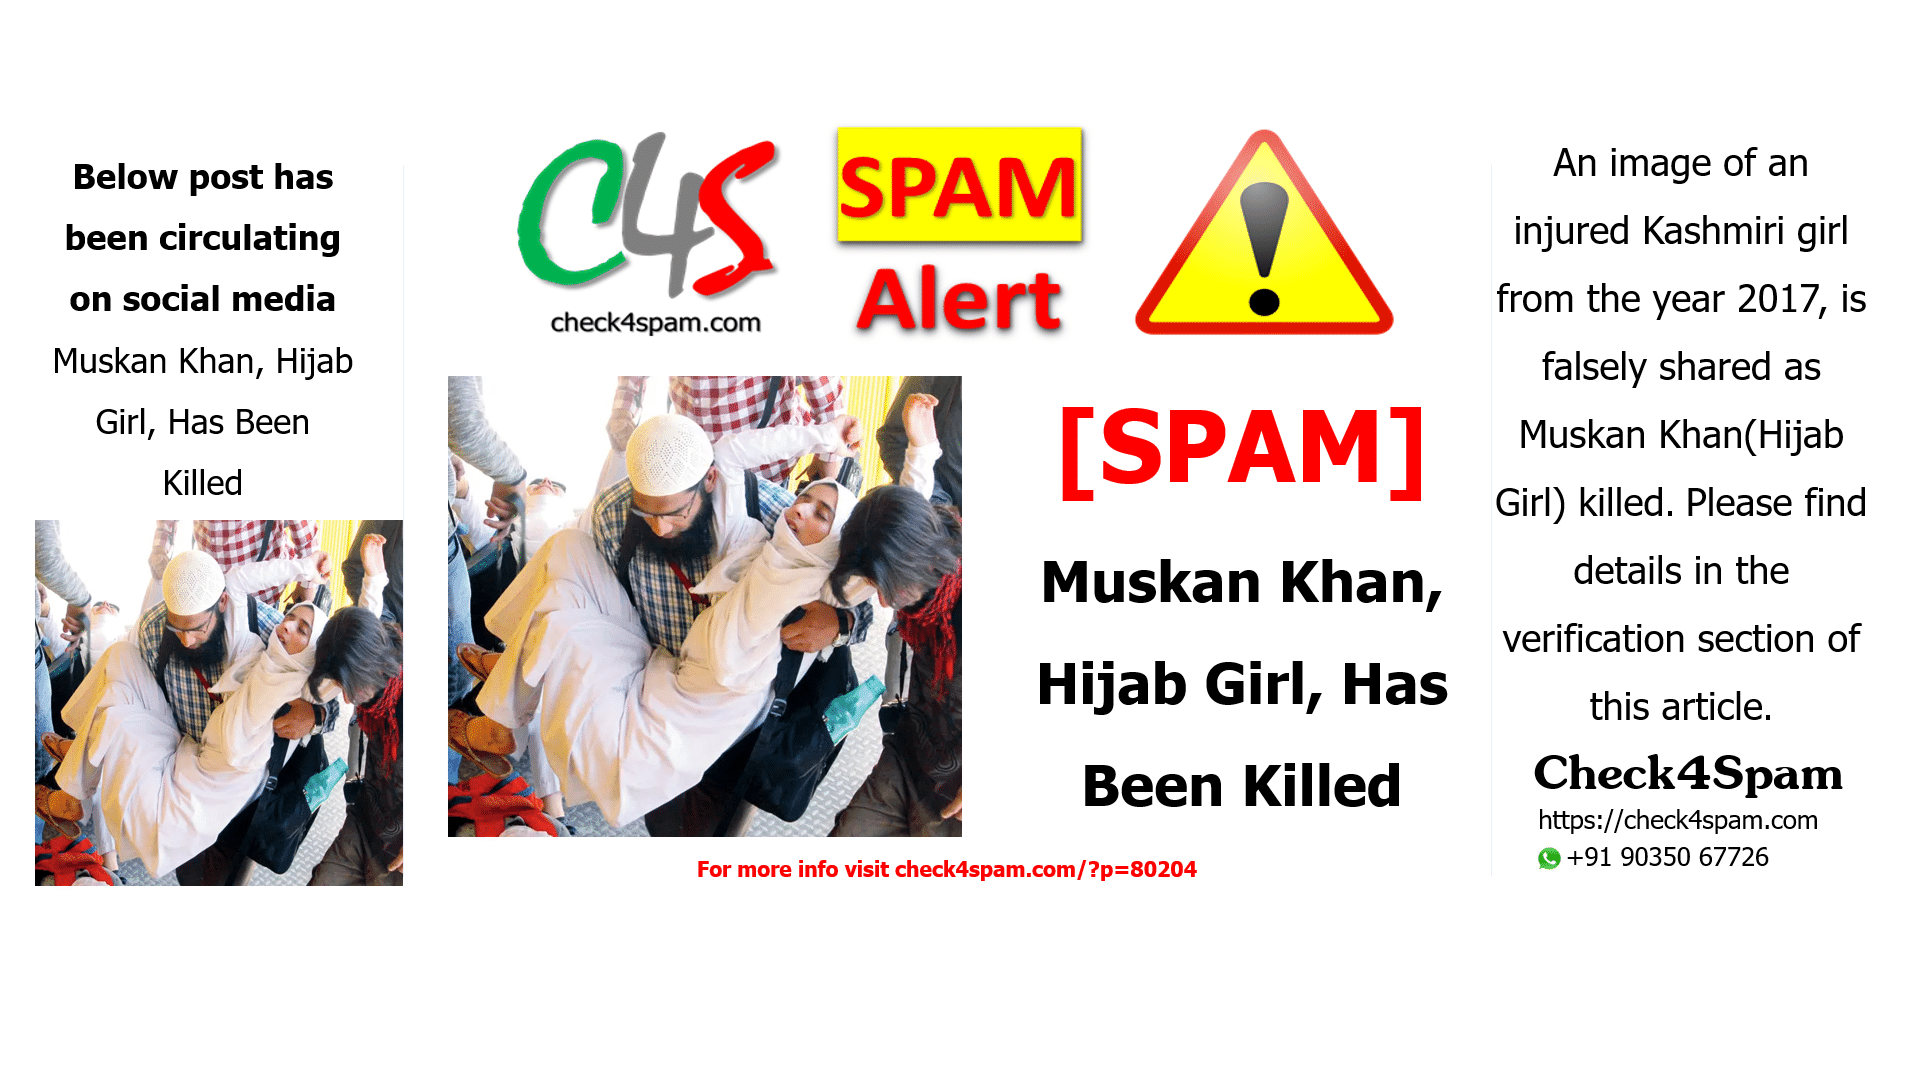 Muskan Khan, Hijab Girl, Has Been Killed